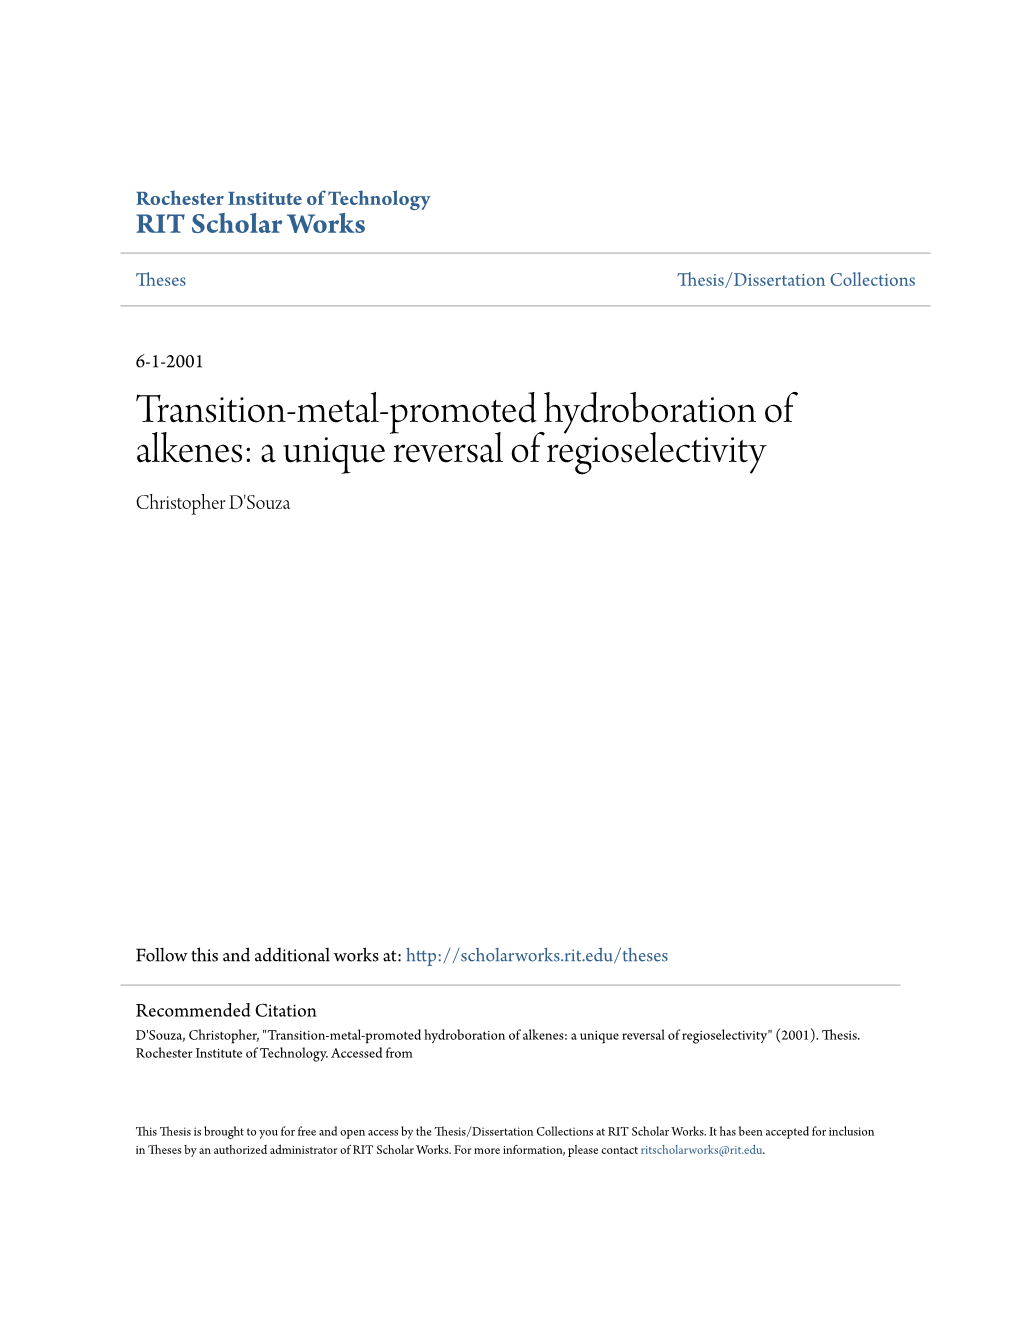 Transition-Metal-Promoted Hydroboration of Alkenes: a Unique Reversal of Regioselectivity Christopher D'souza